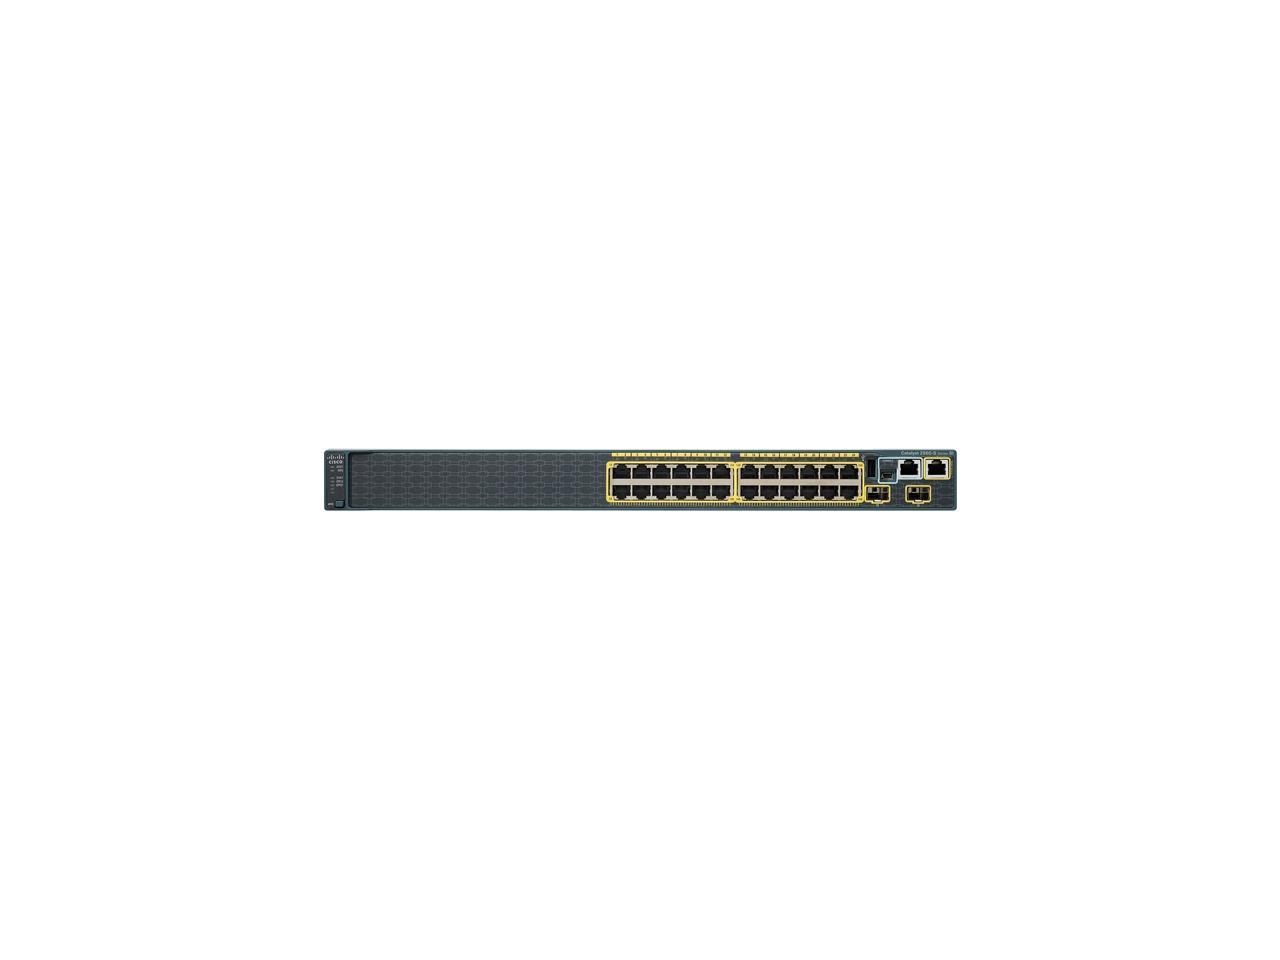 Cisco Catalyst 2960X-24PD-L Ethernet Switch